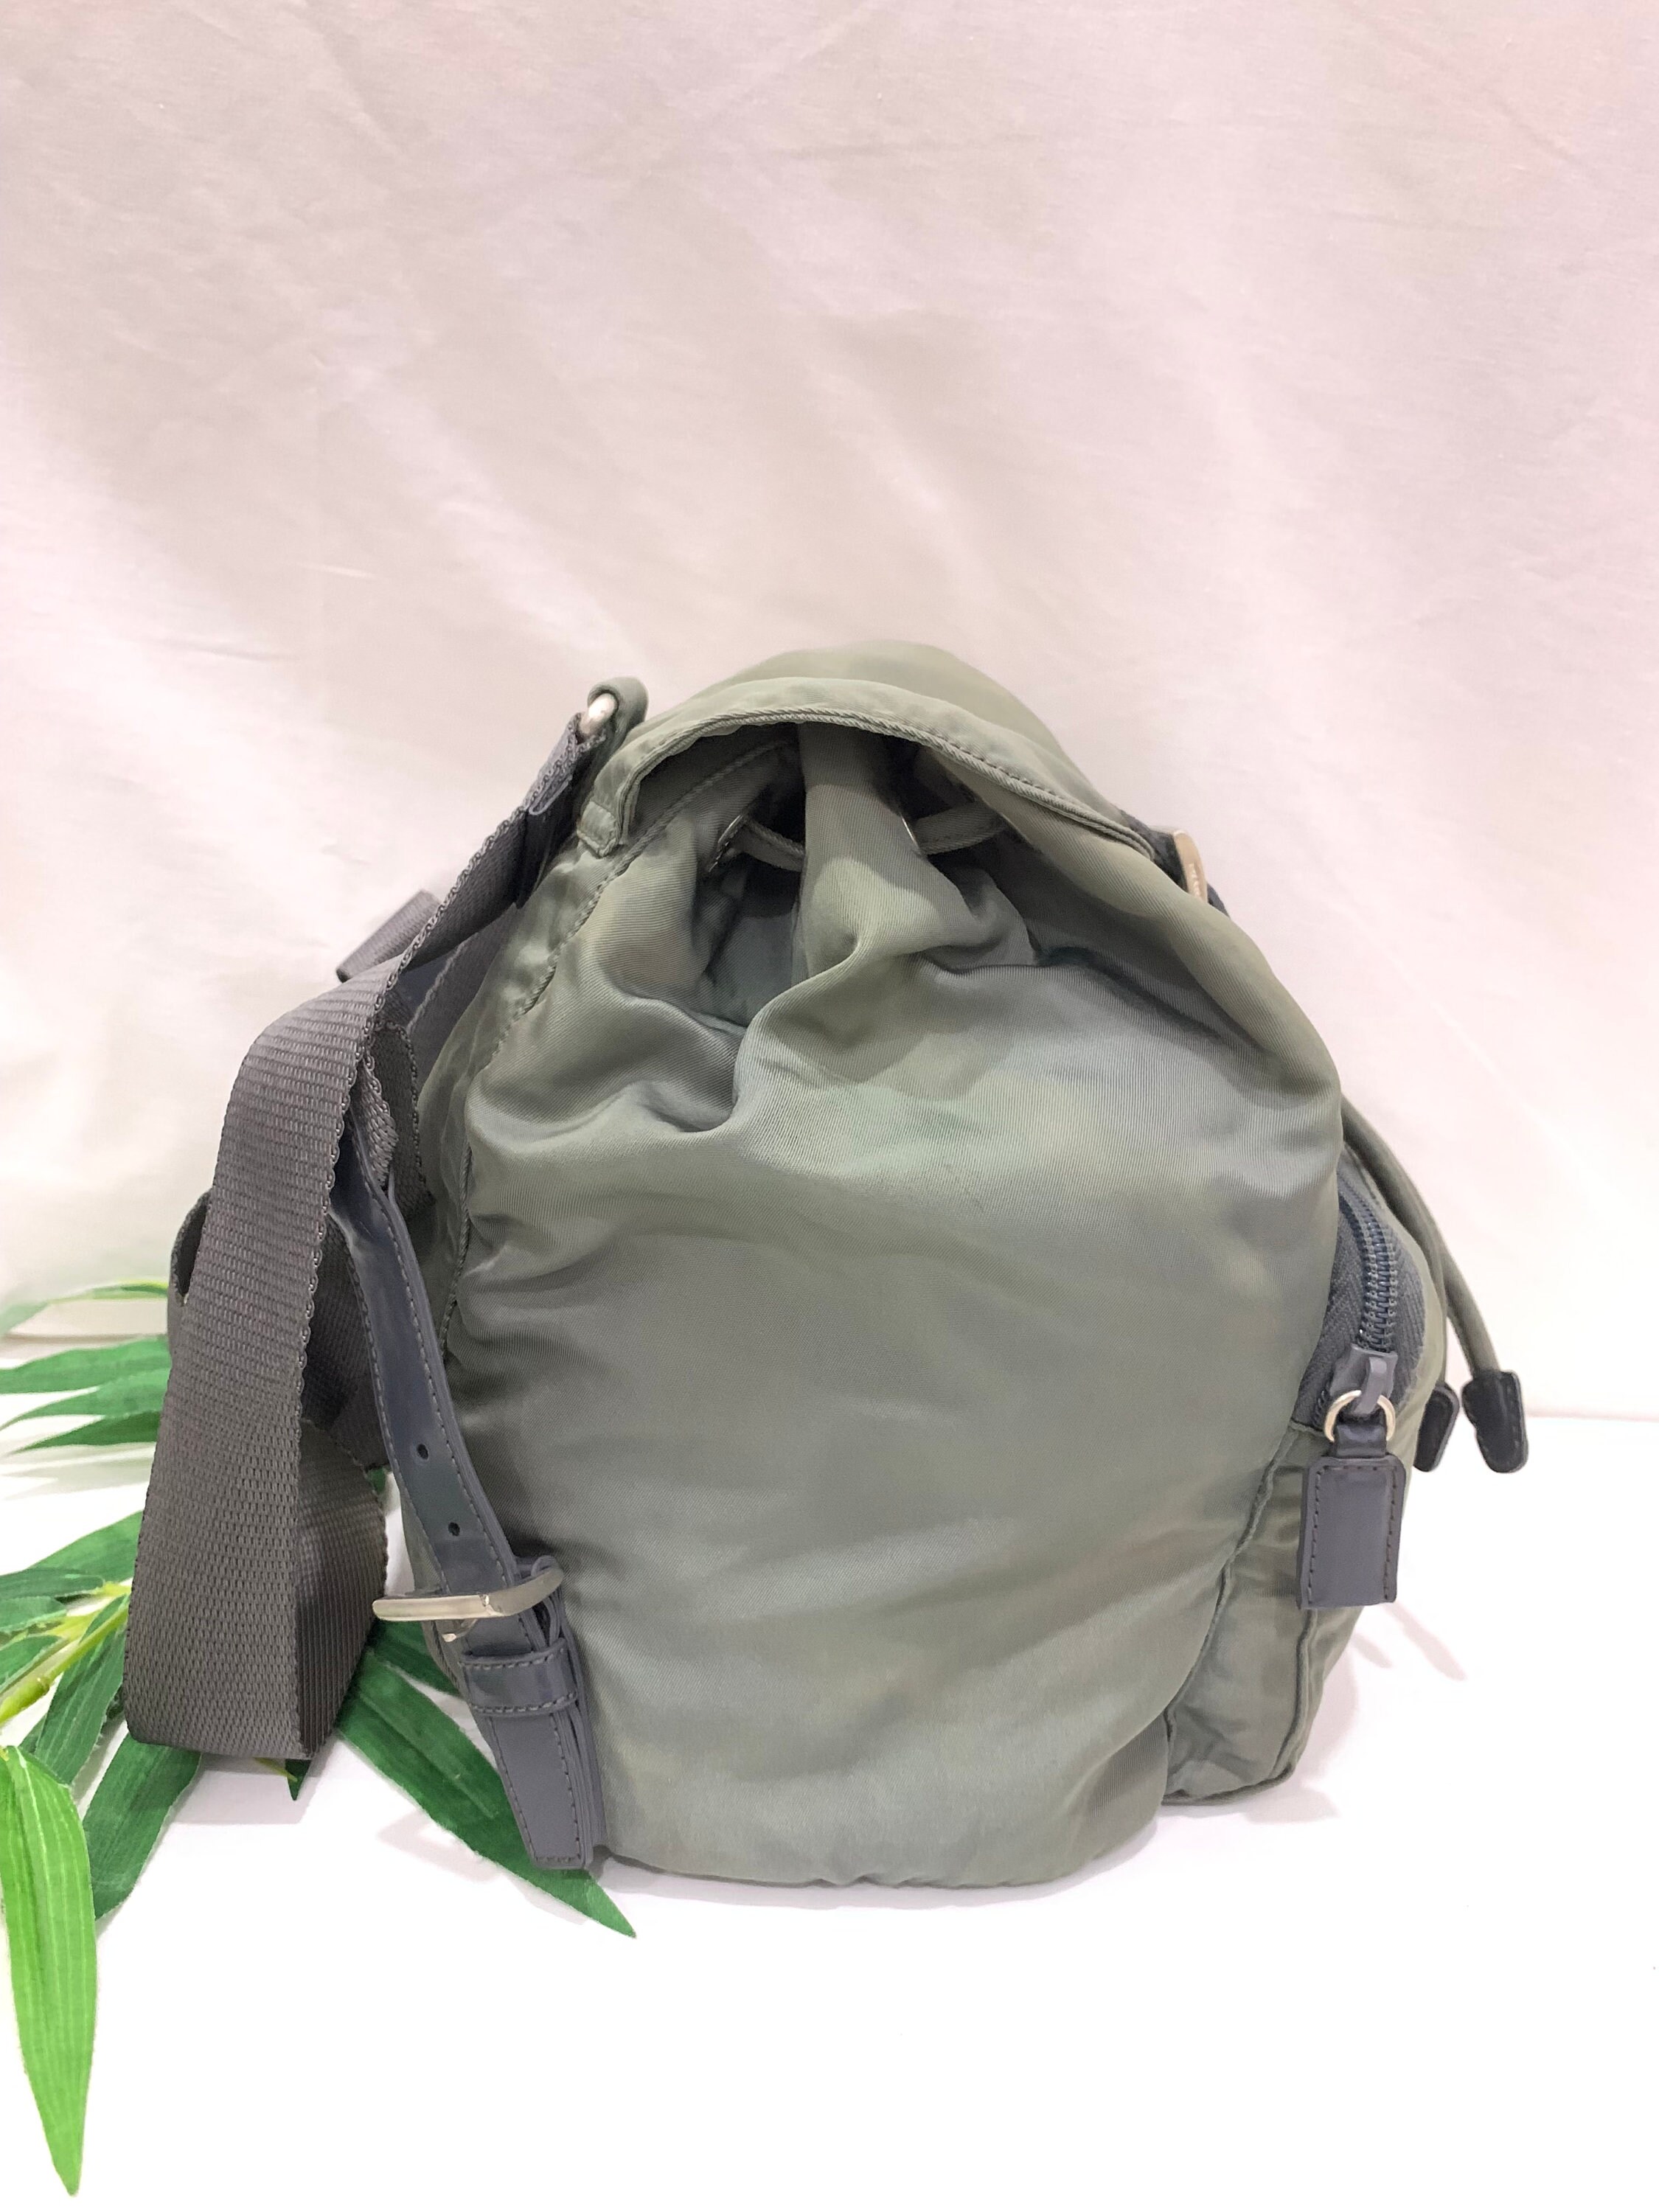 Prada - Nero Milano Leather and Nylon Backpack - Catawiki